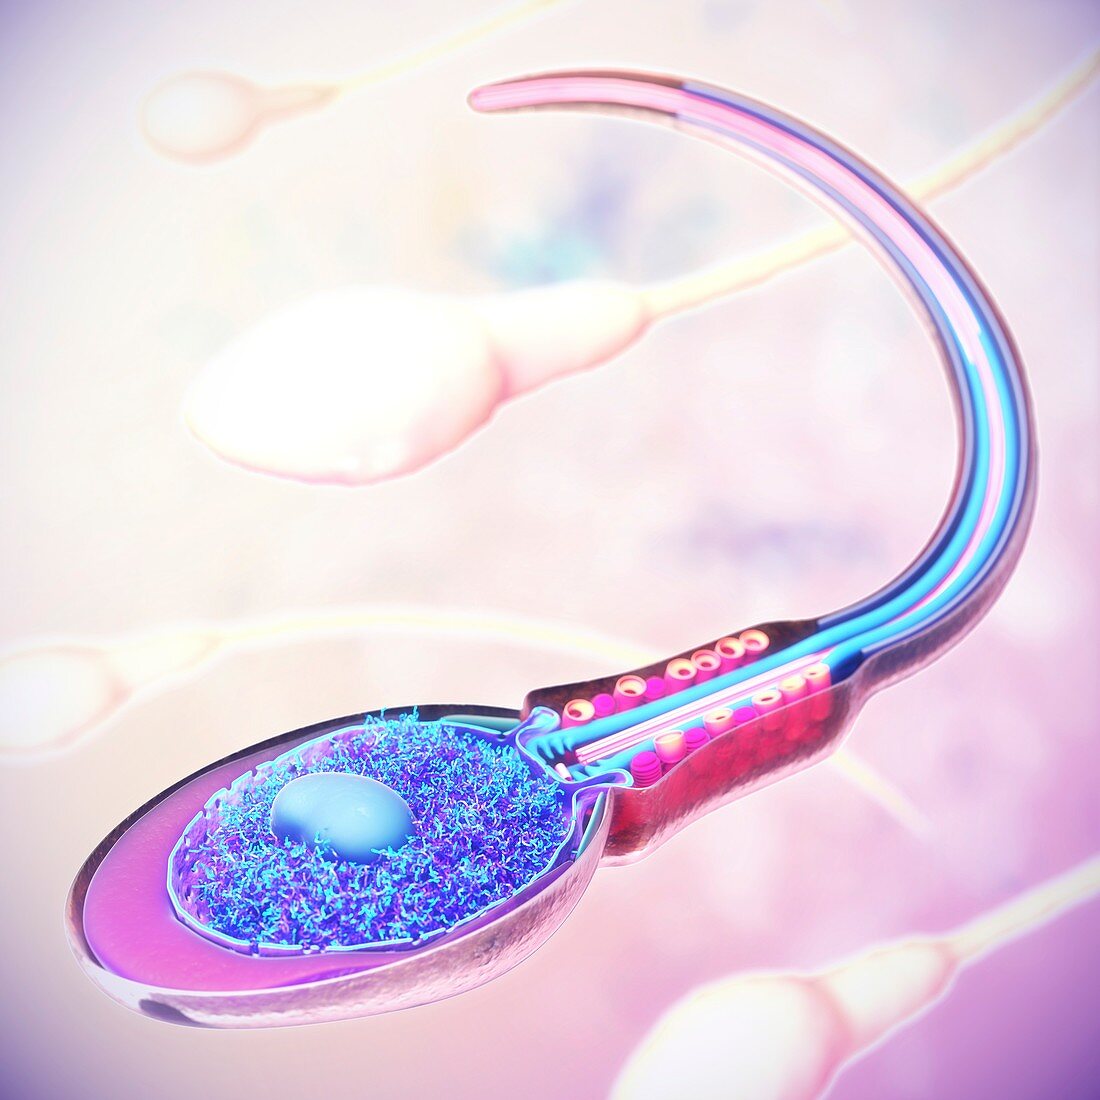 Sperm cell anatomy, illustration